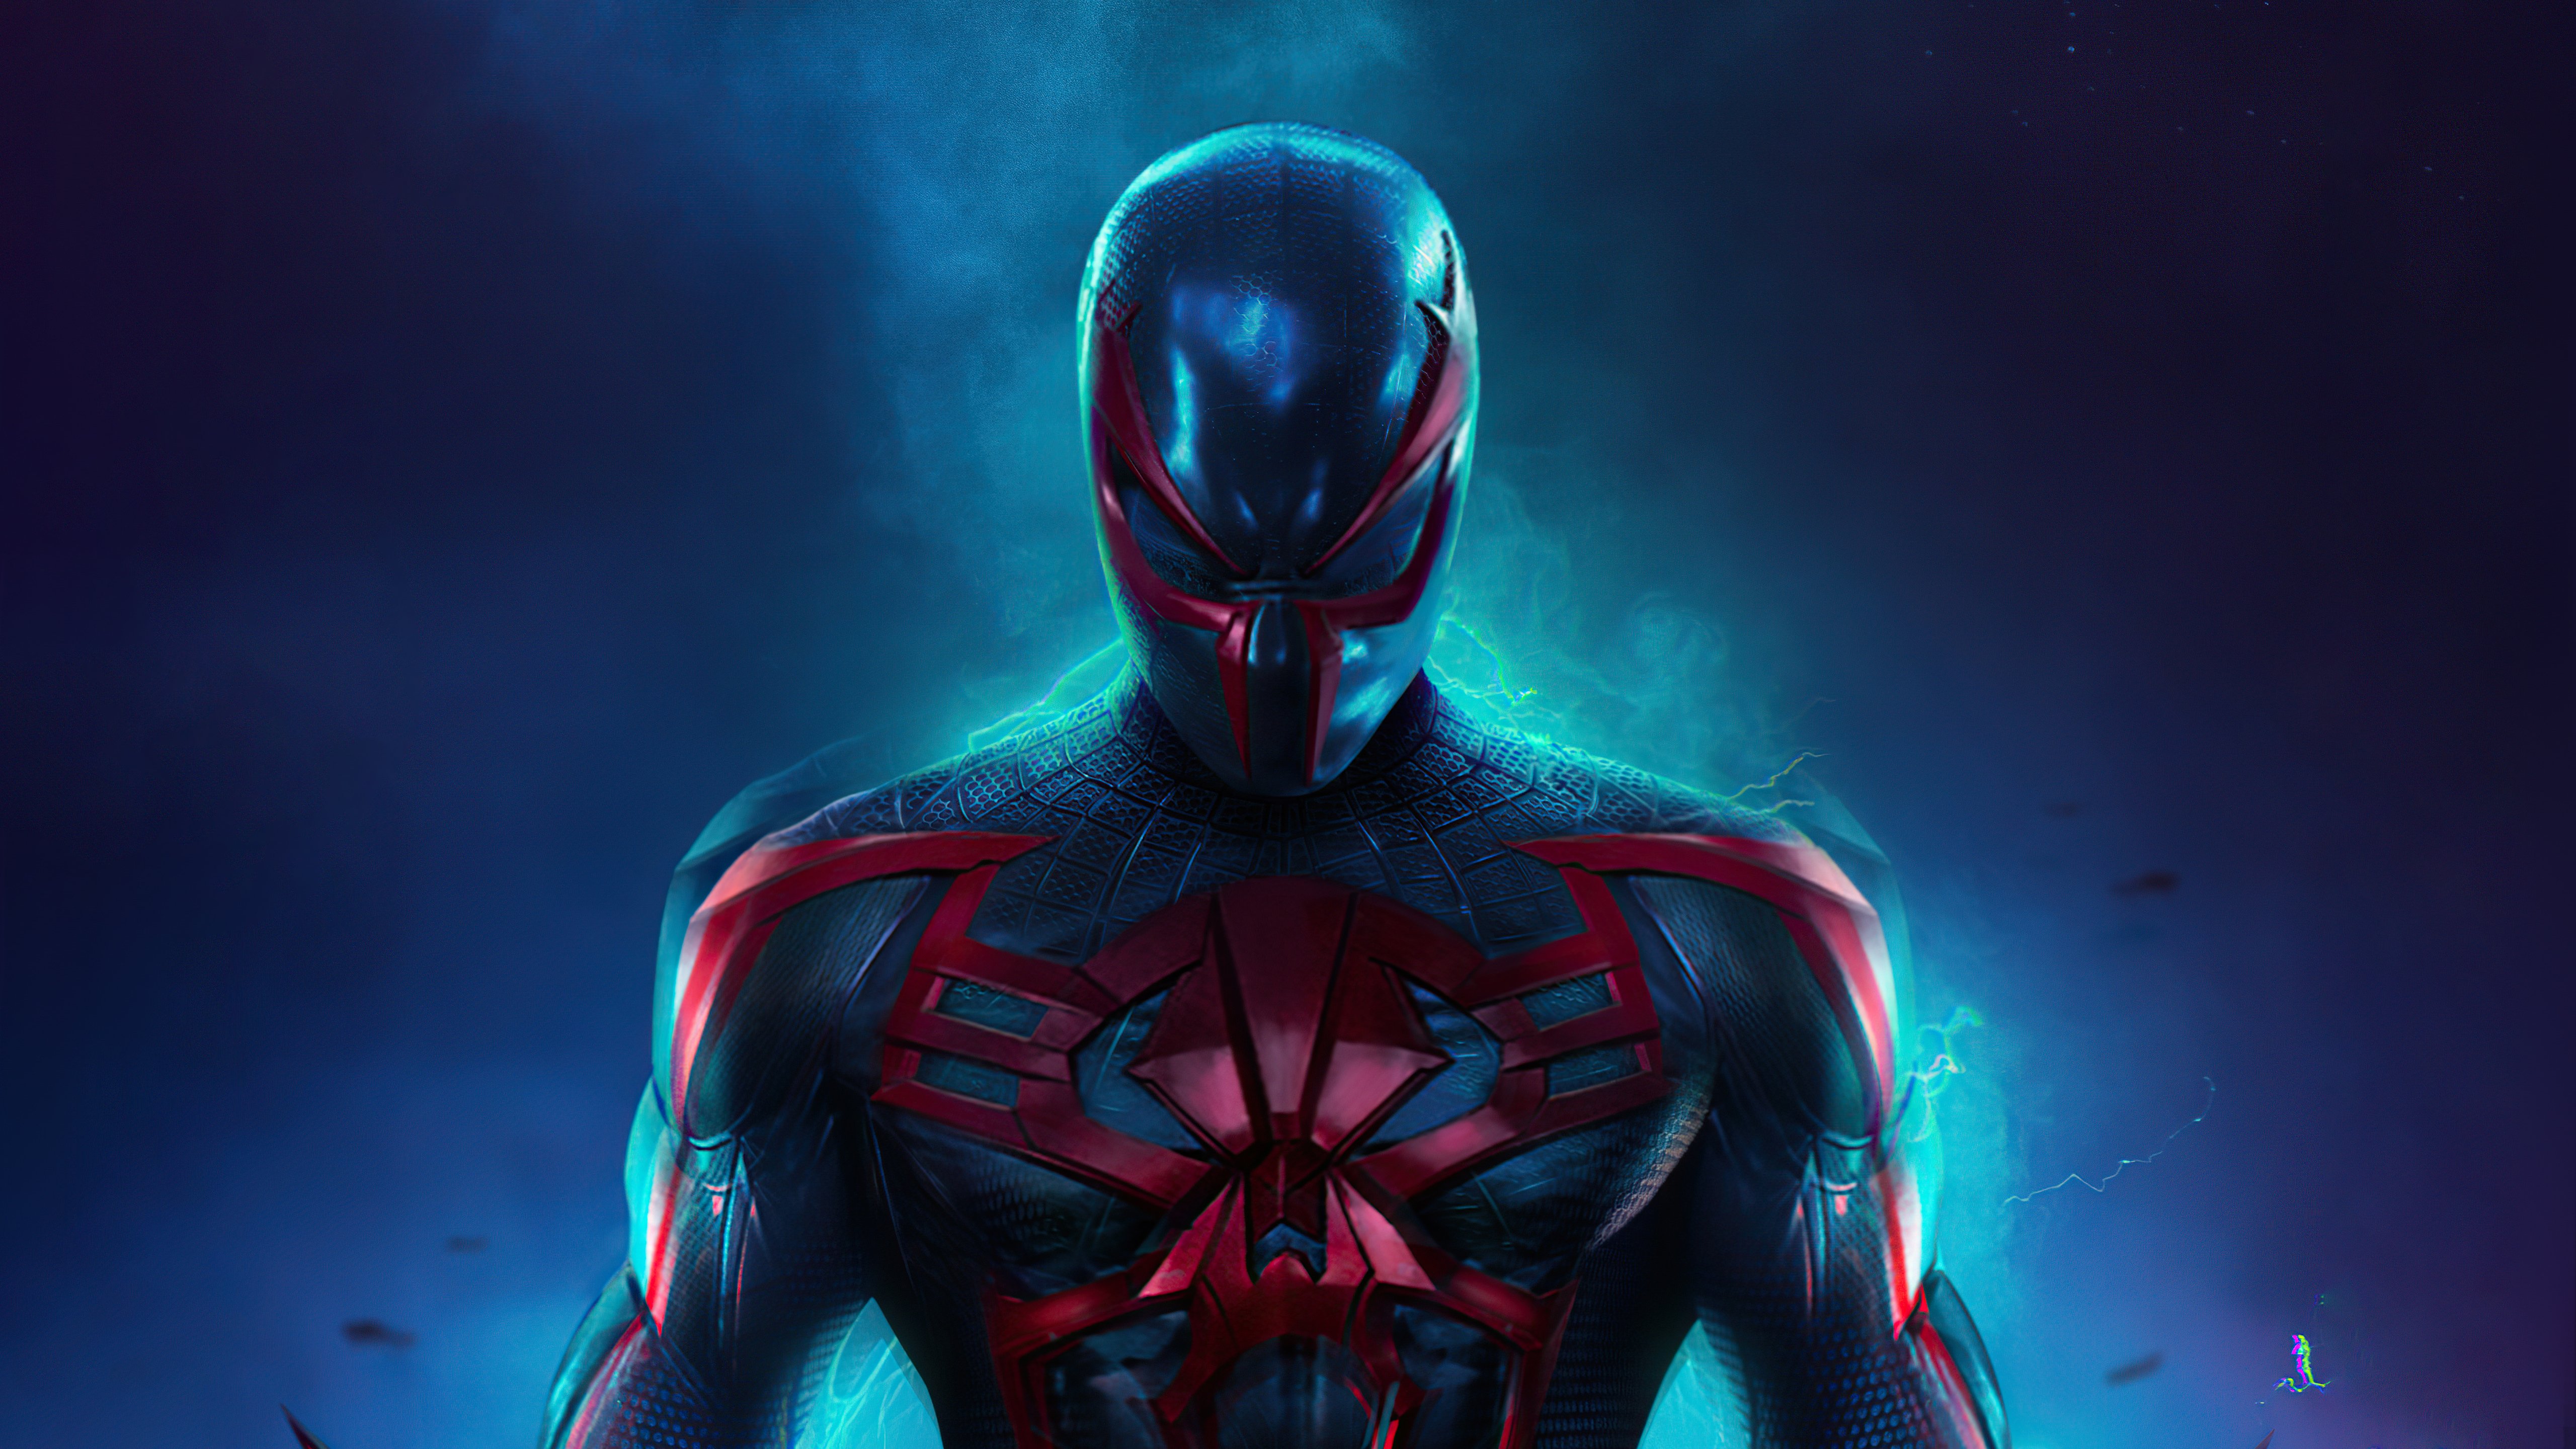 Spider Man 2099 blue suit Wallpaper 5k Ultra HD ID:9269